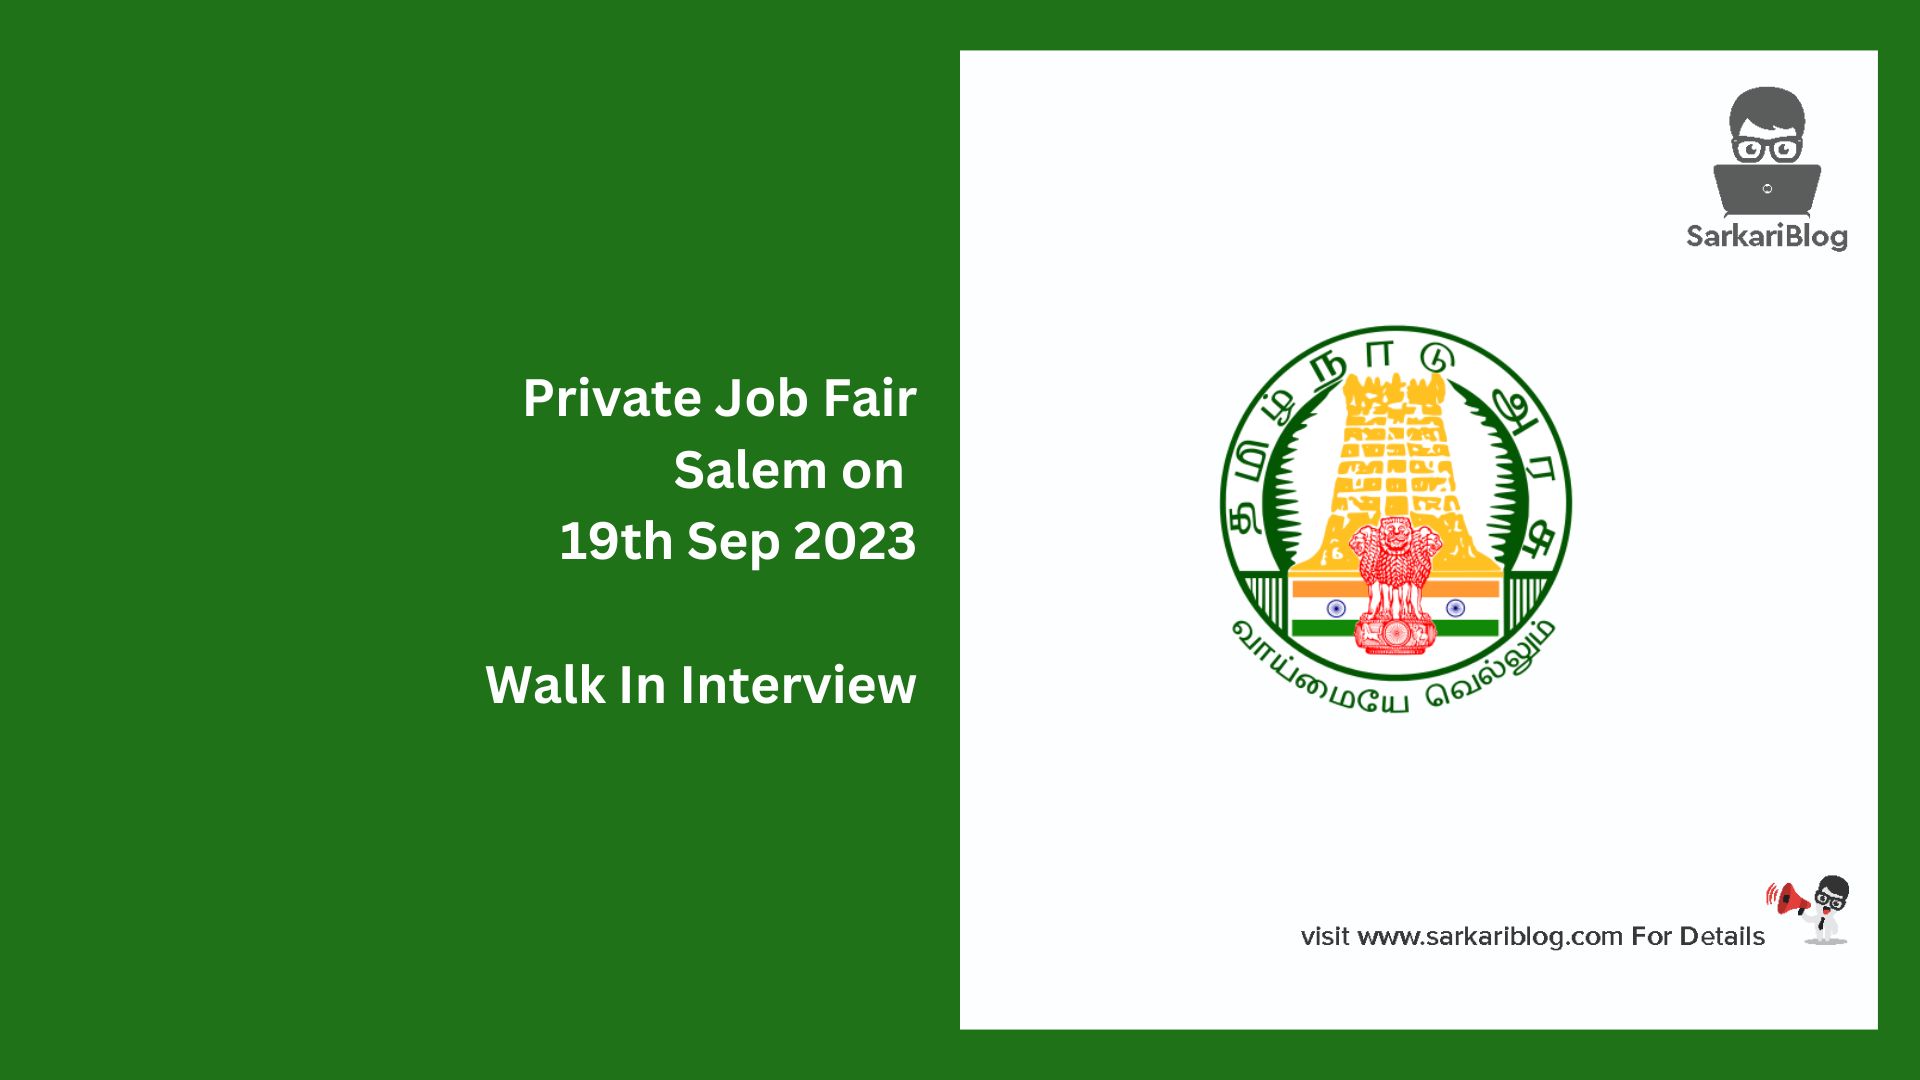 Private Job Fair Salem on 19th Sep 2023